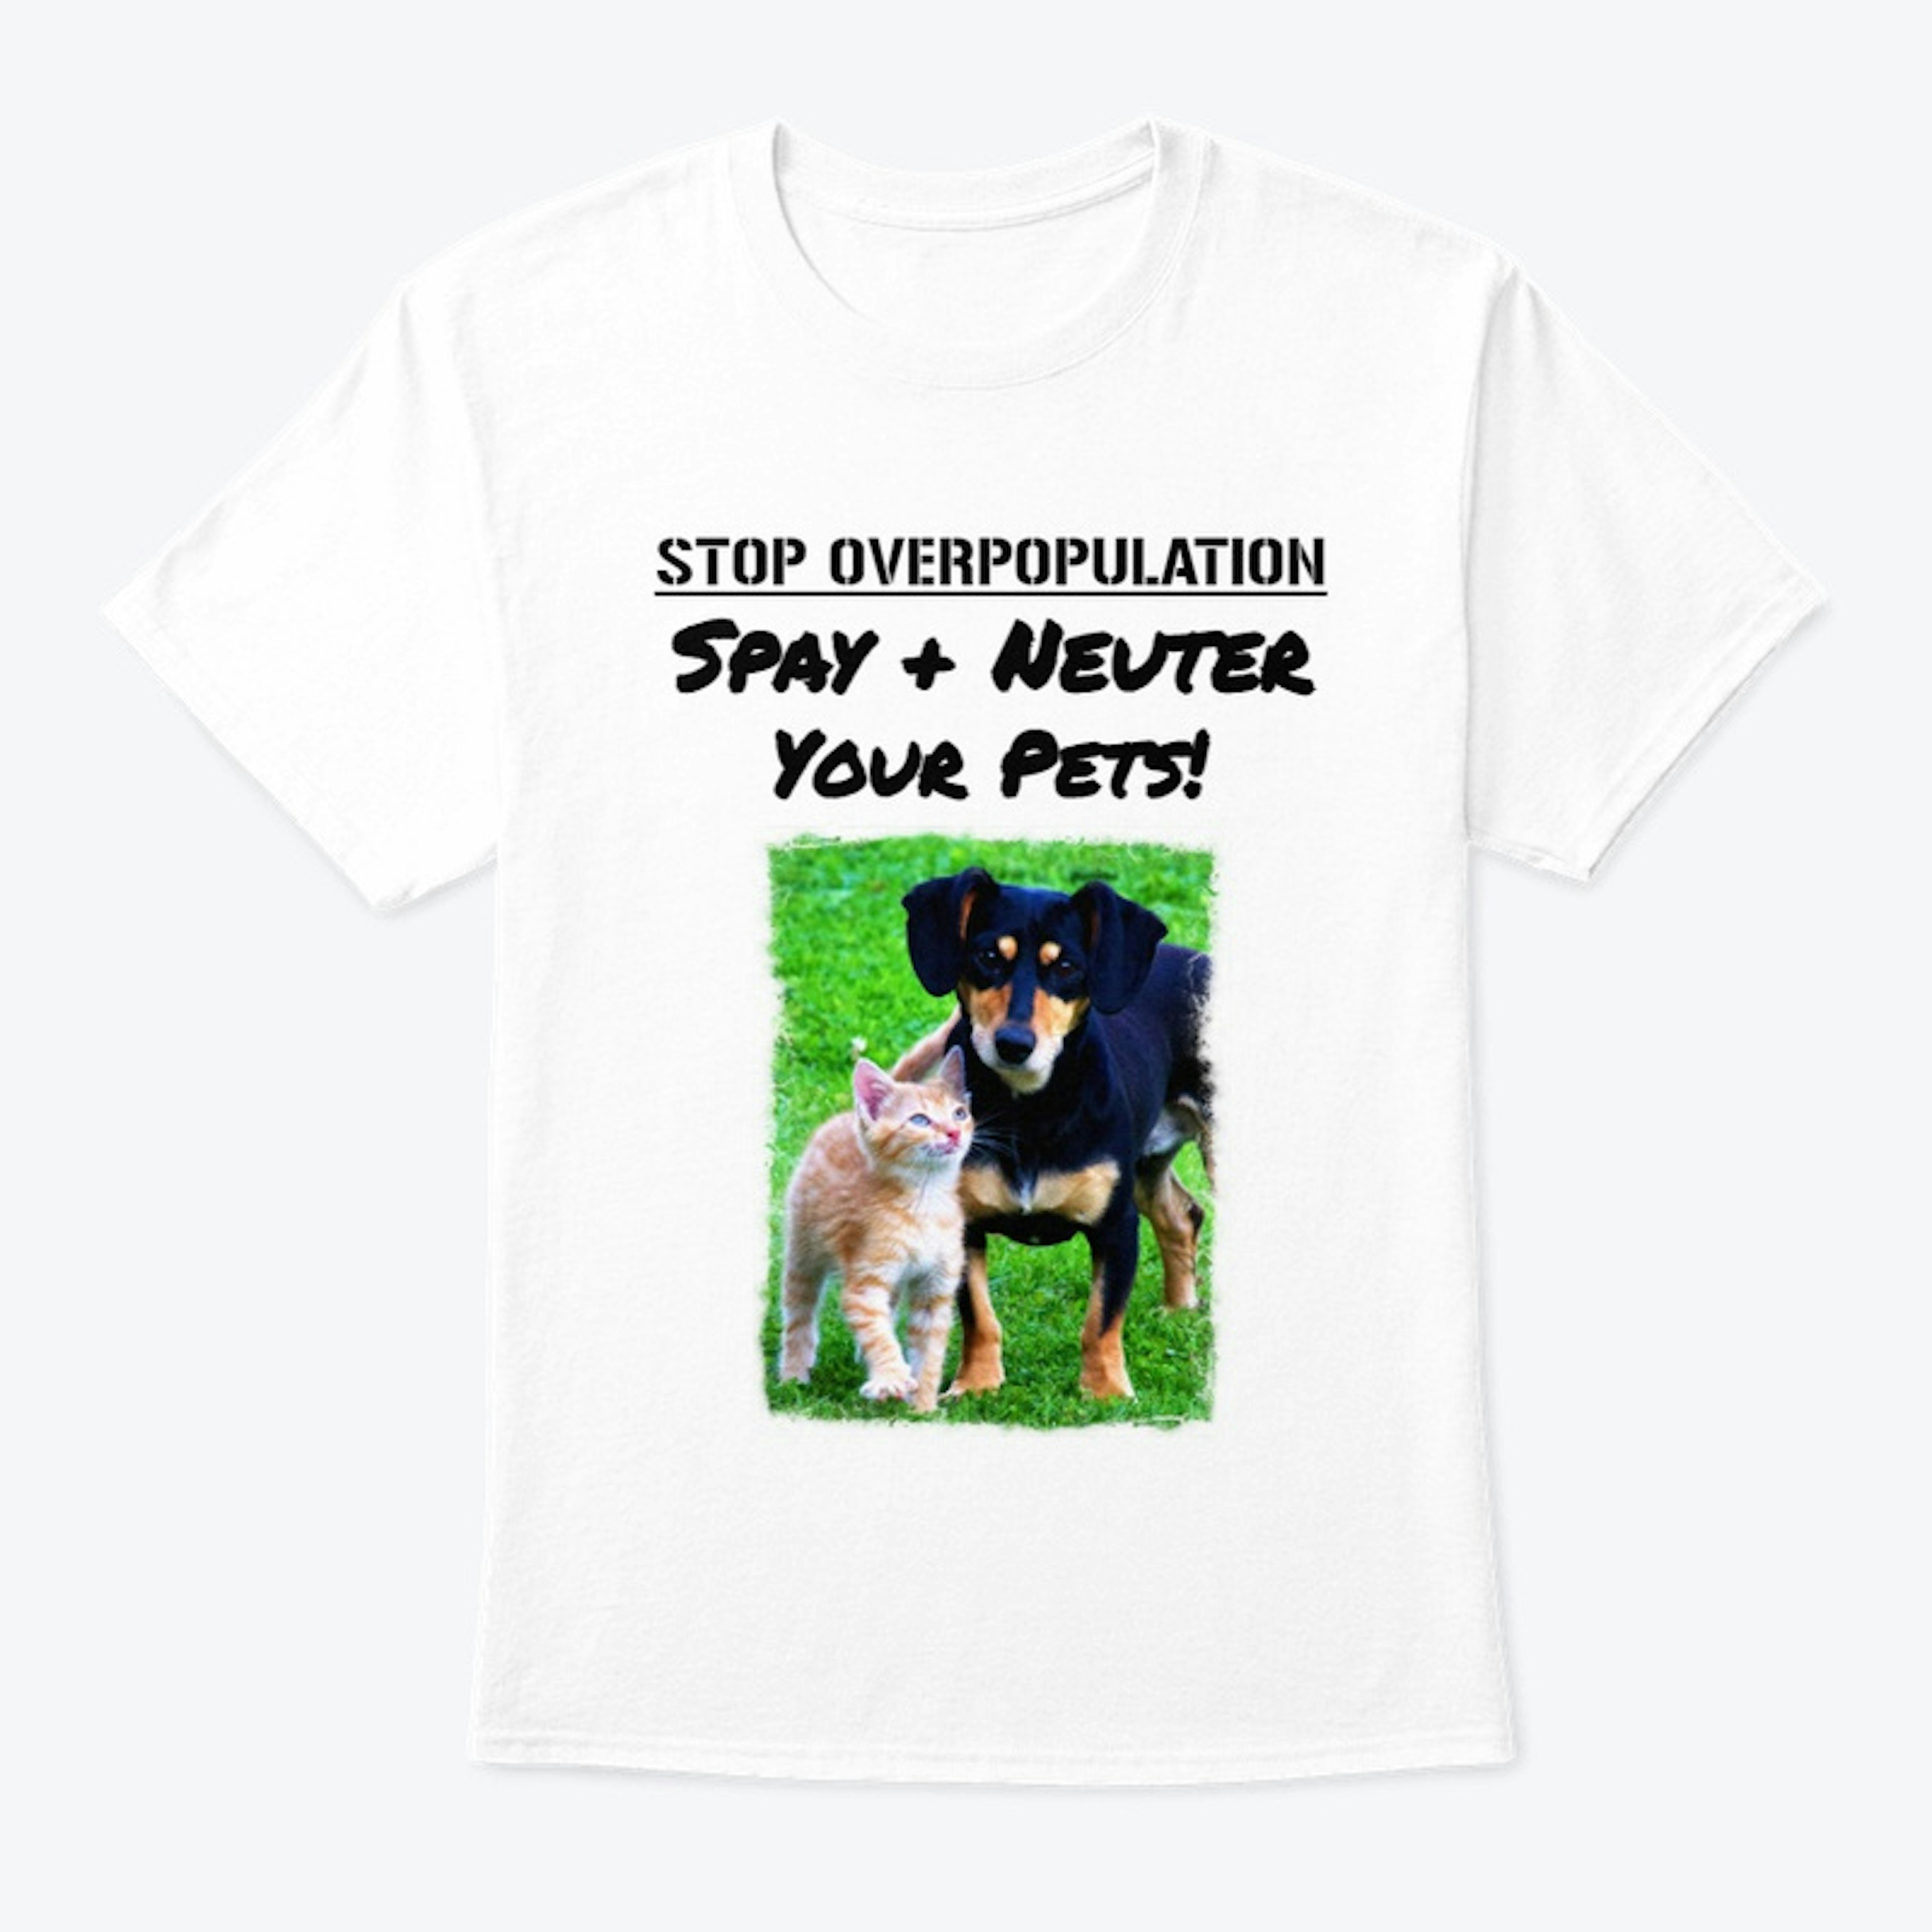 Stop Overpopulation - Spay + Neuter Pets